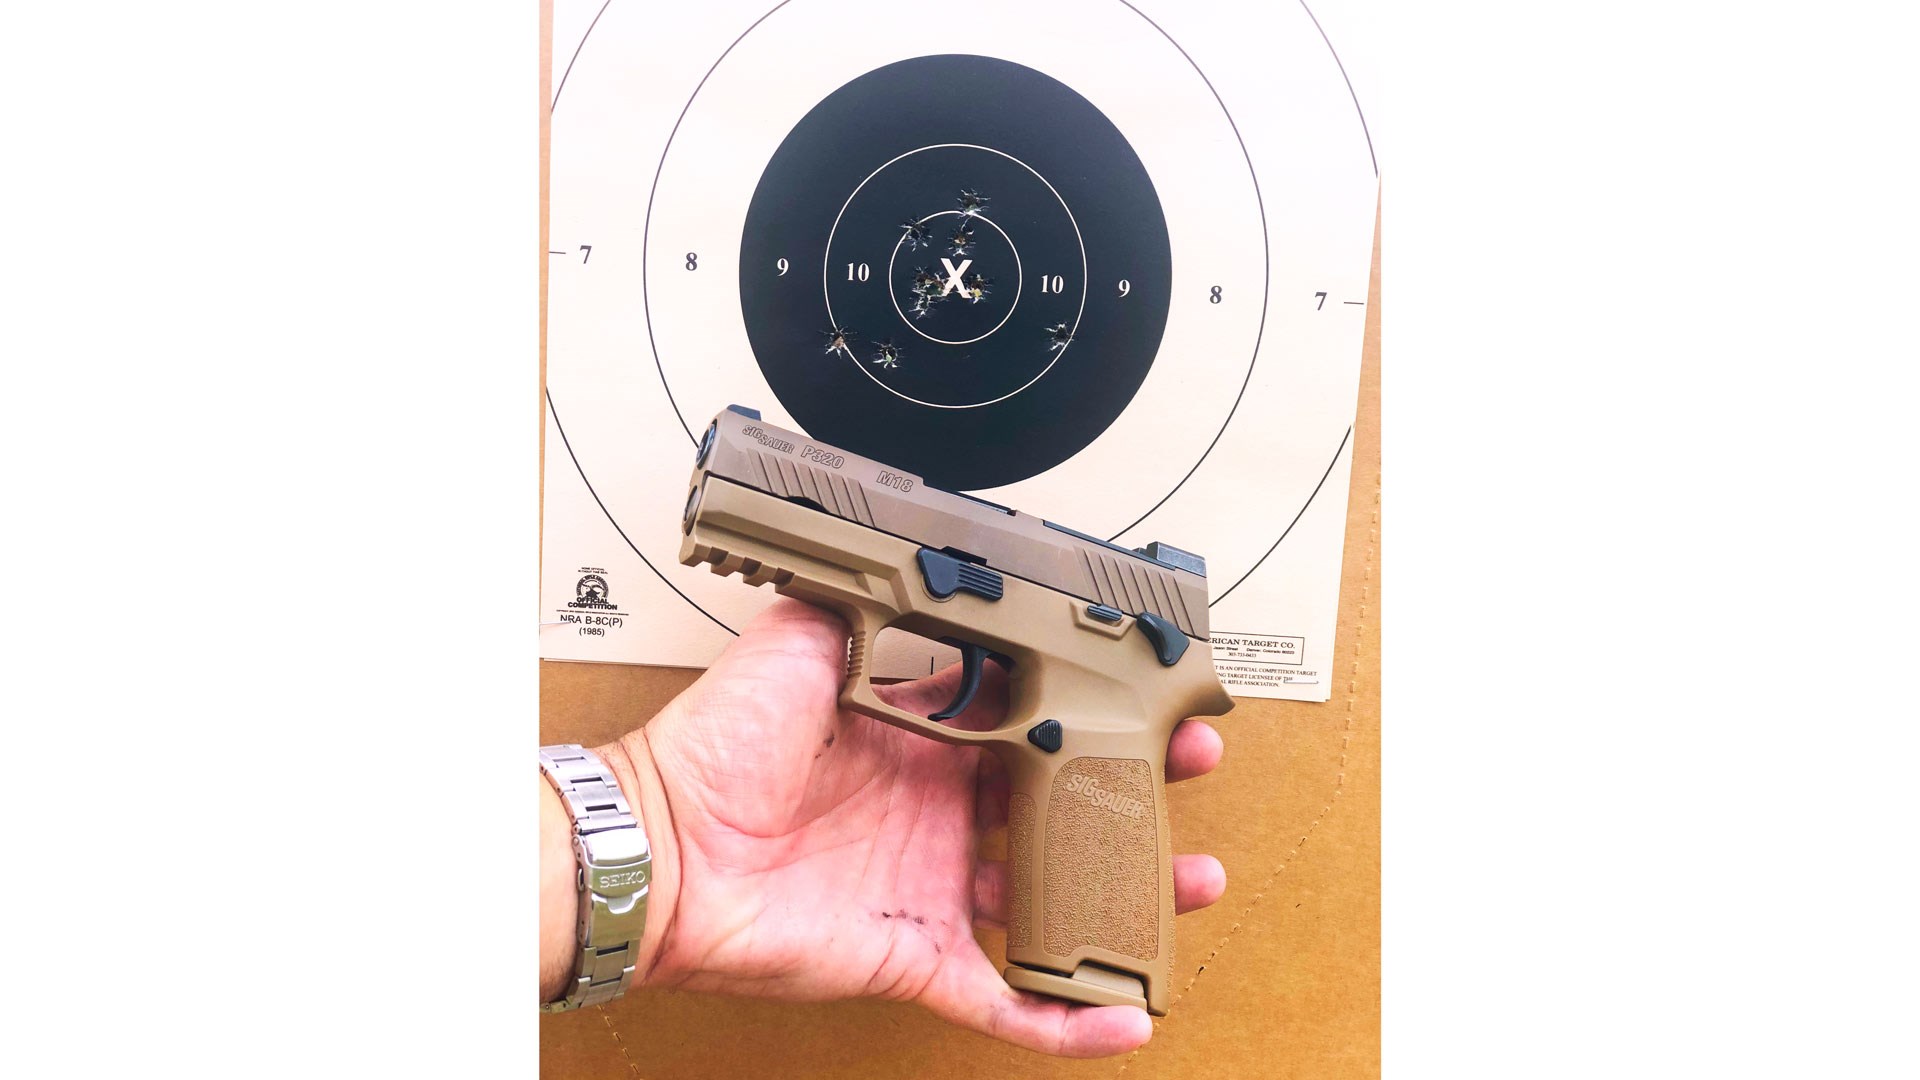 SIG Sauer M18 in hand next to target bullseye